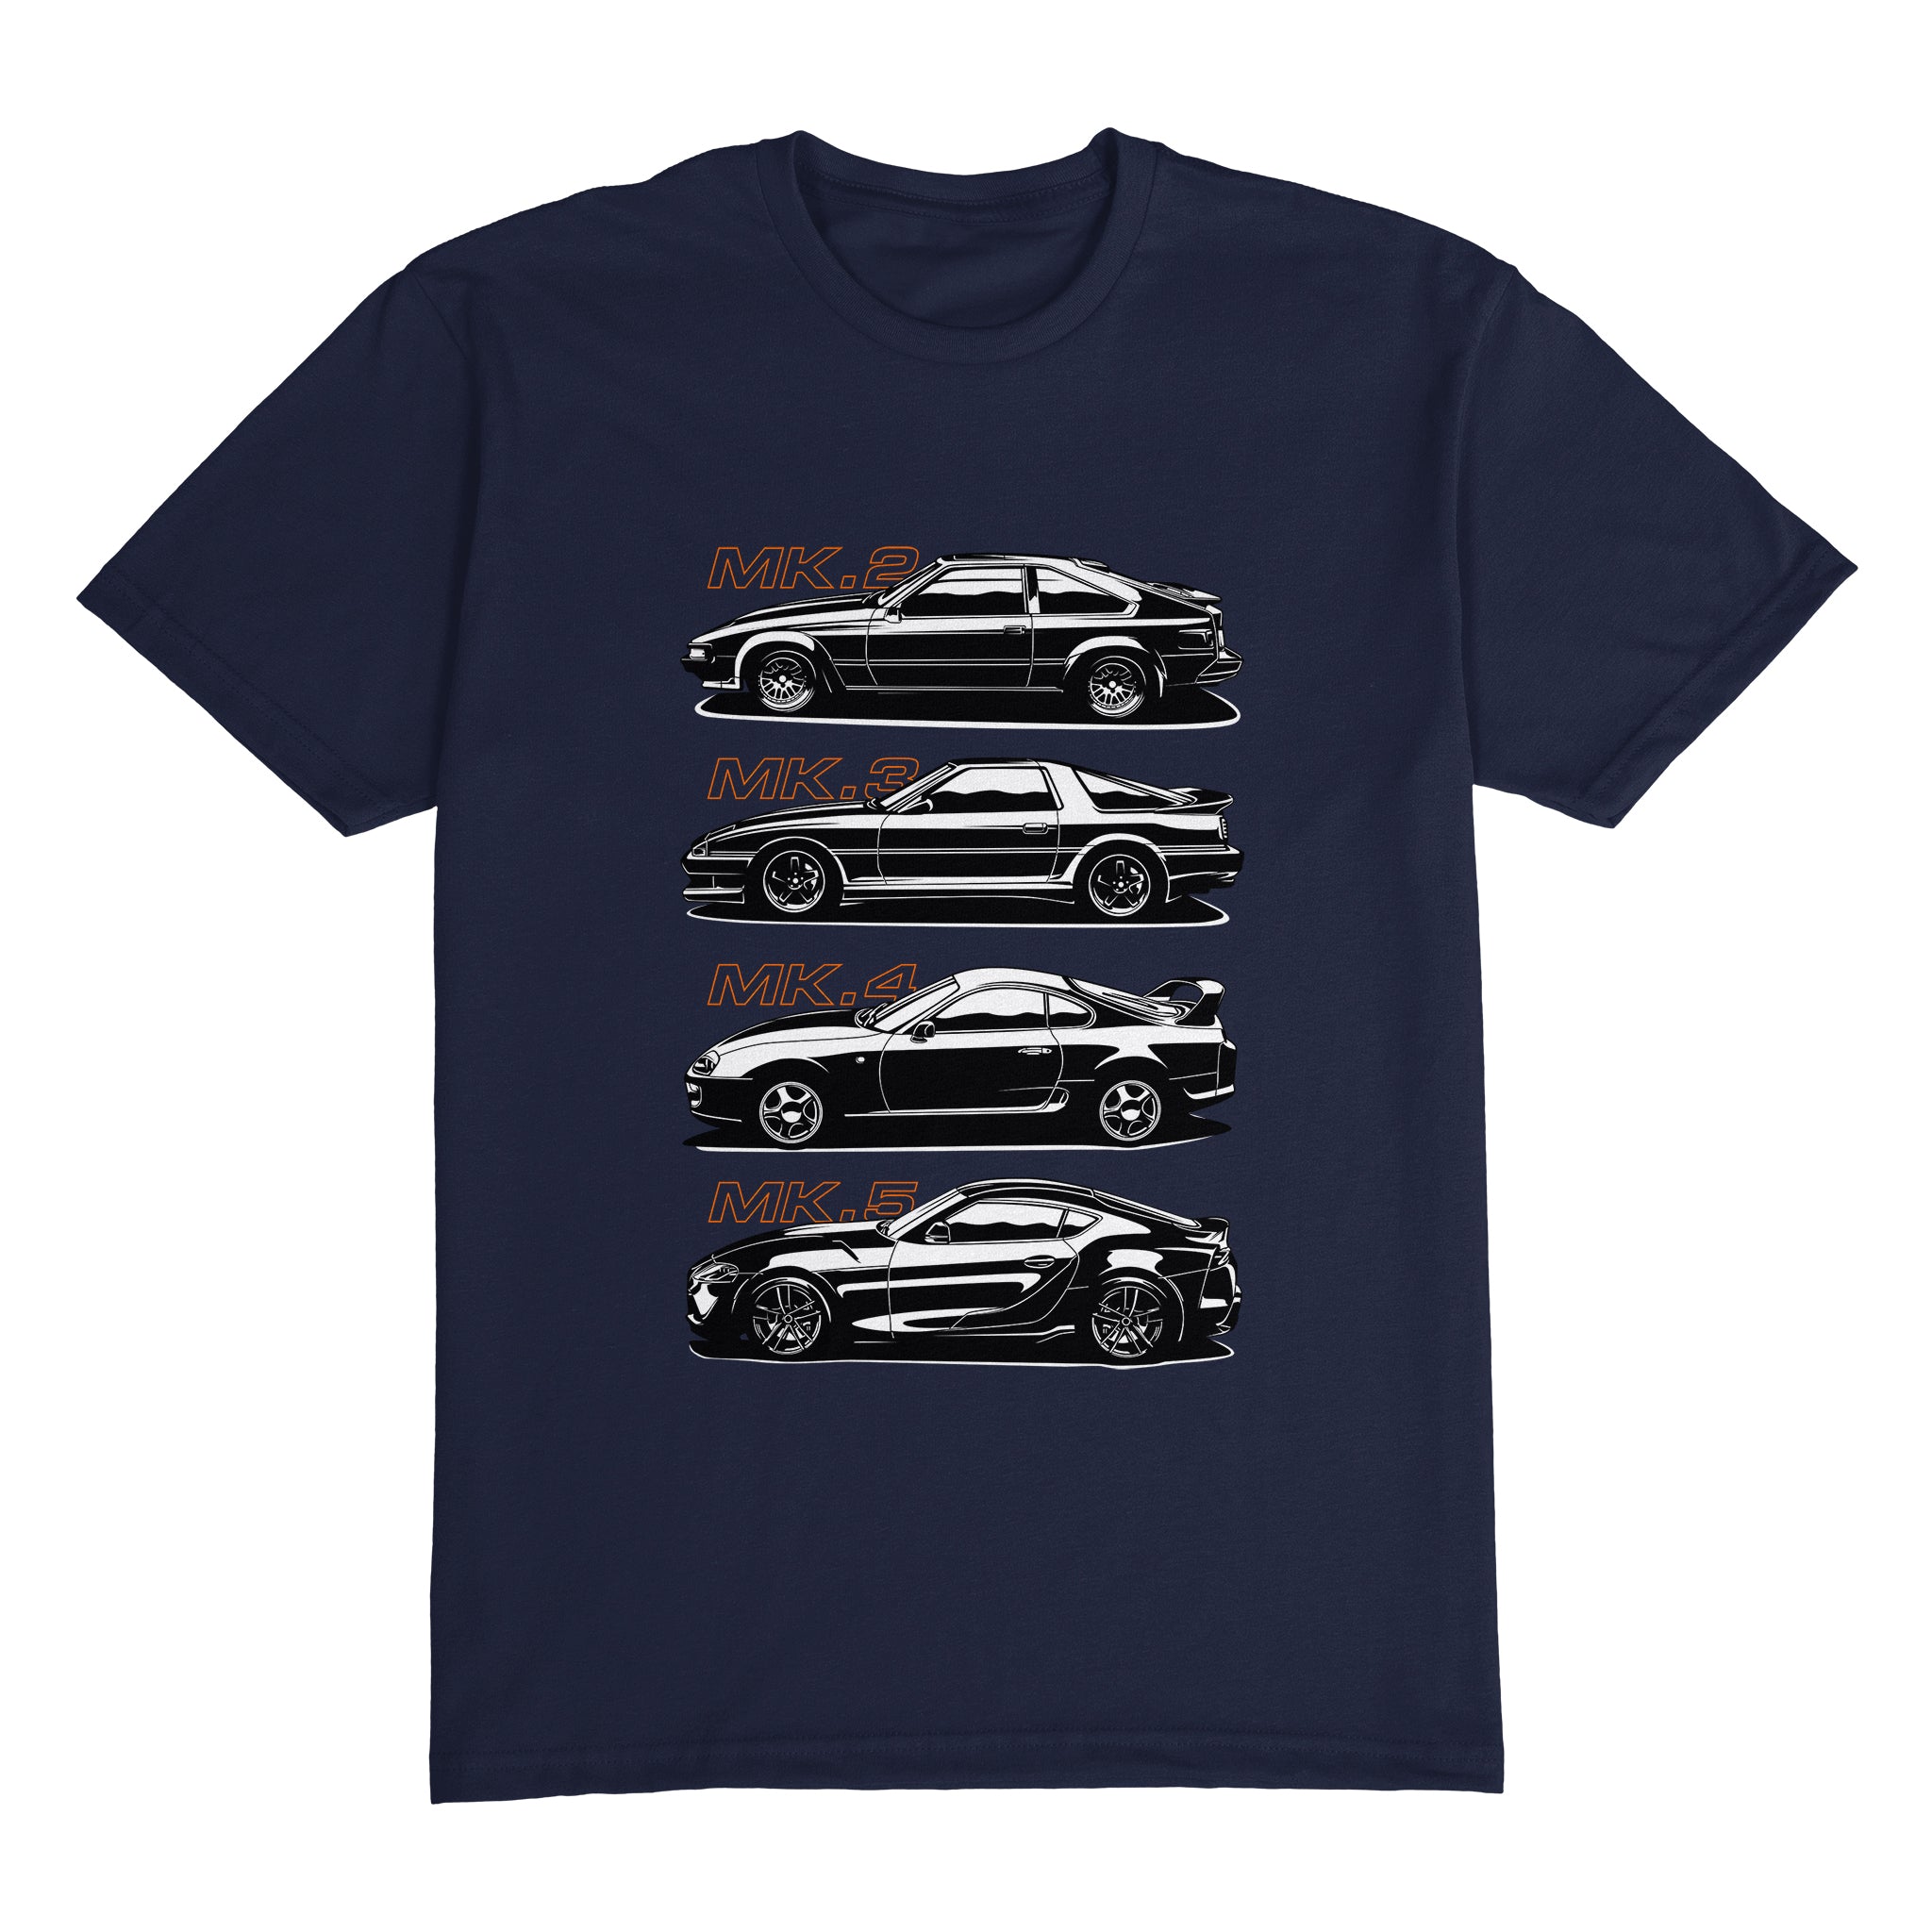 Toyota Supra History MK2, MK3, MK4, MK5 Car t-shirt in Navy